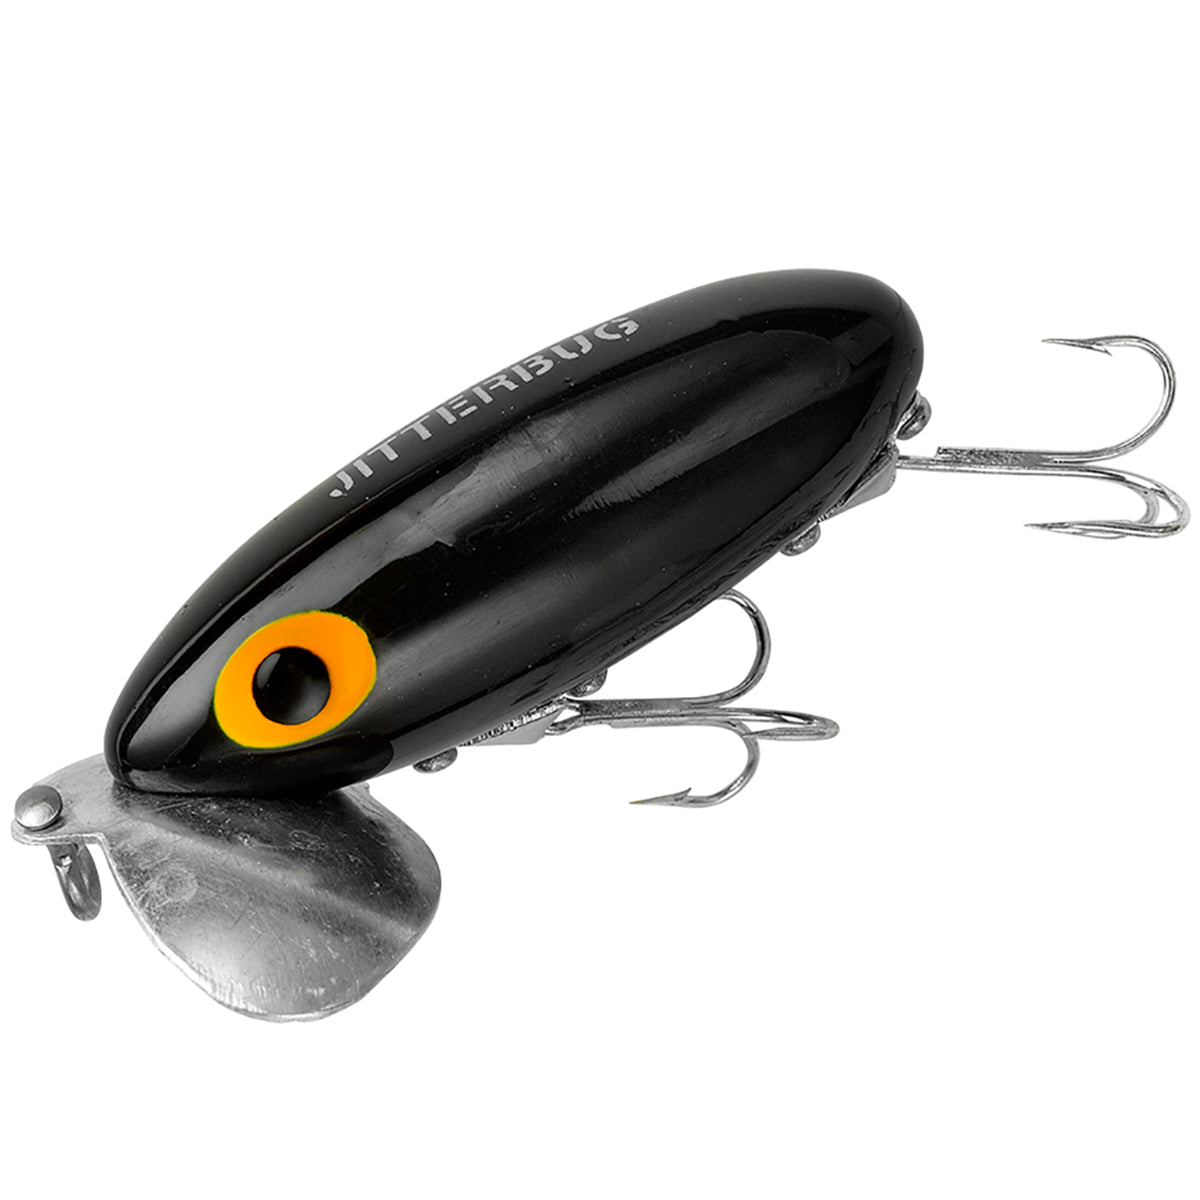 Arbogast Jitterbug Clicker 1/4 oz. Topwater Fishing Lure - Black Arbogast